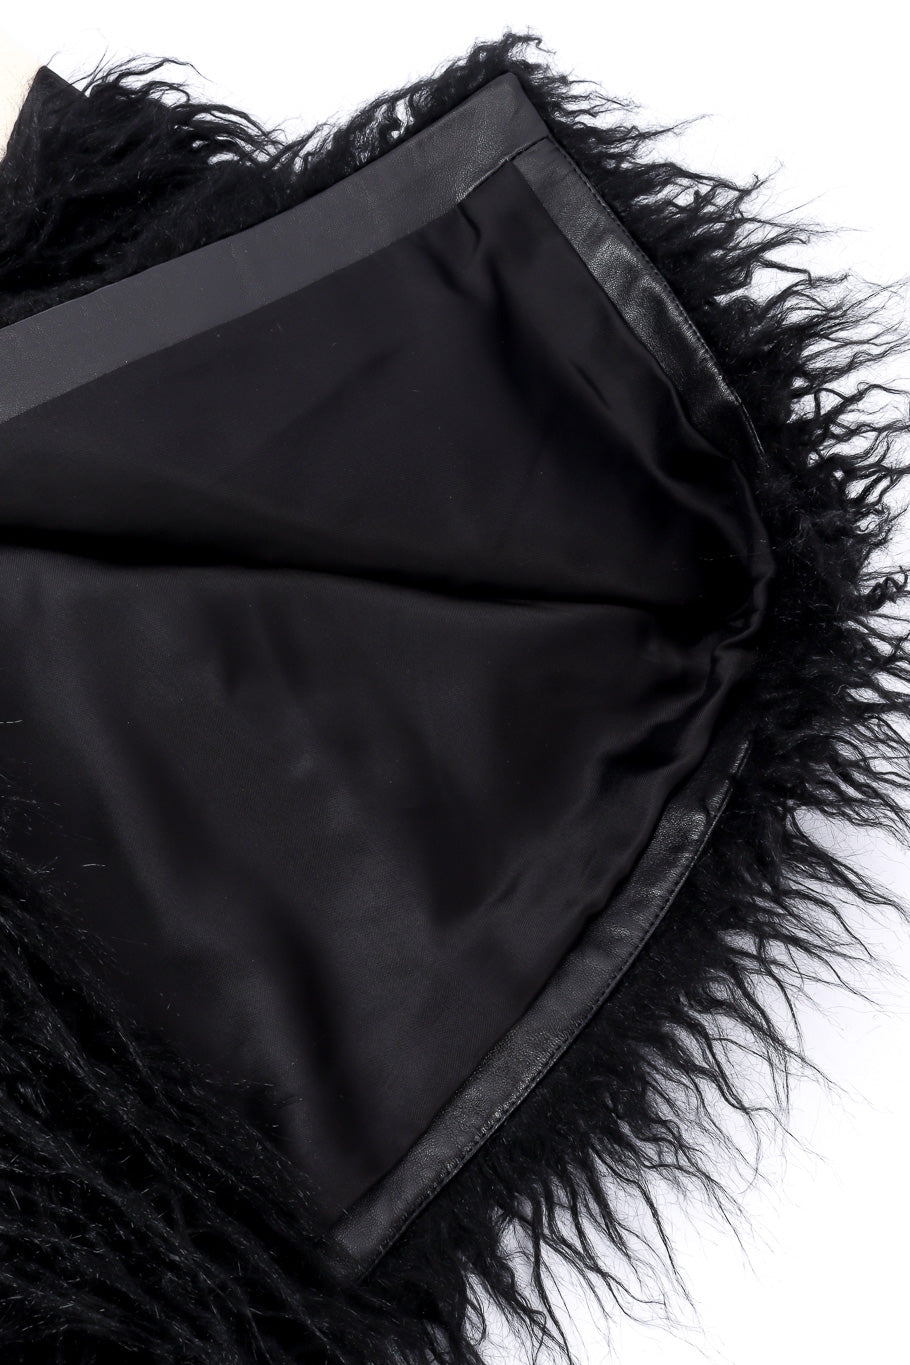 Saint Laurent 2019 F/W Zebra Print Midi Skirt view of lining and leather trim @Recessla